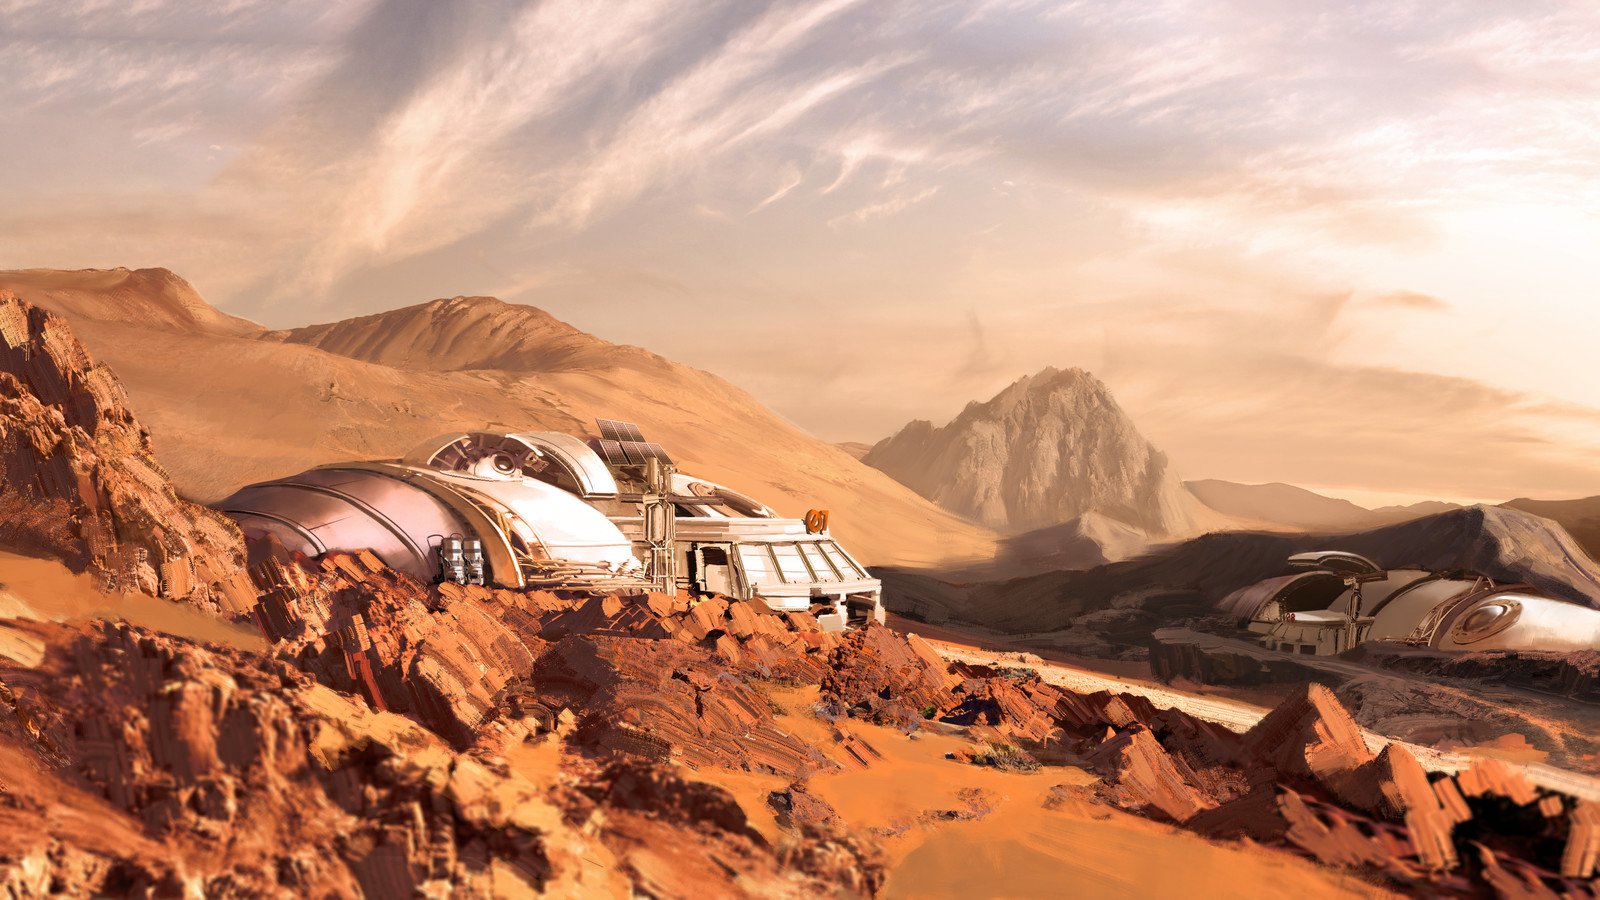 Mars Station Replica domes